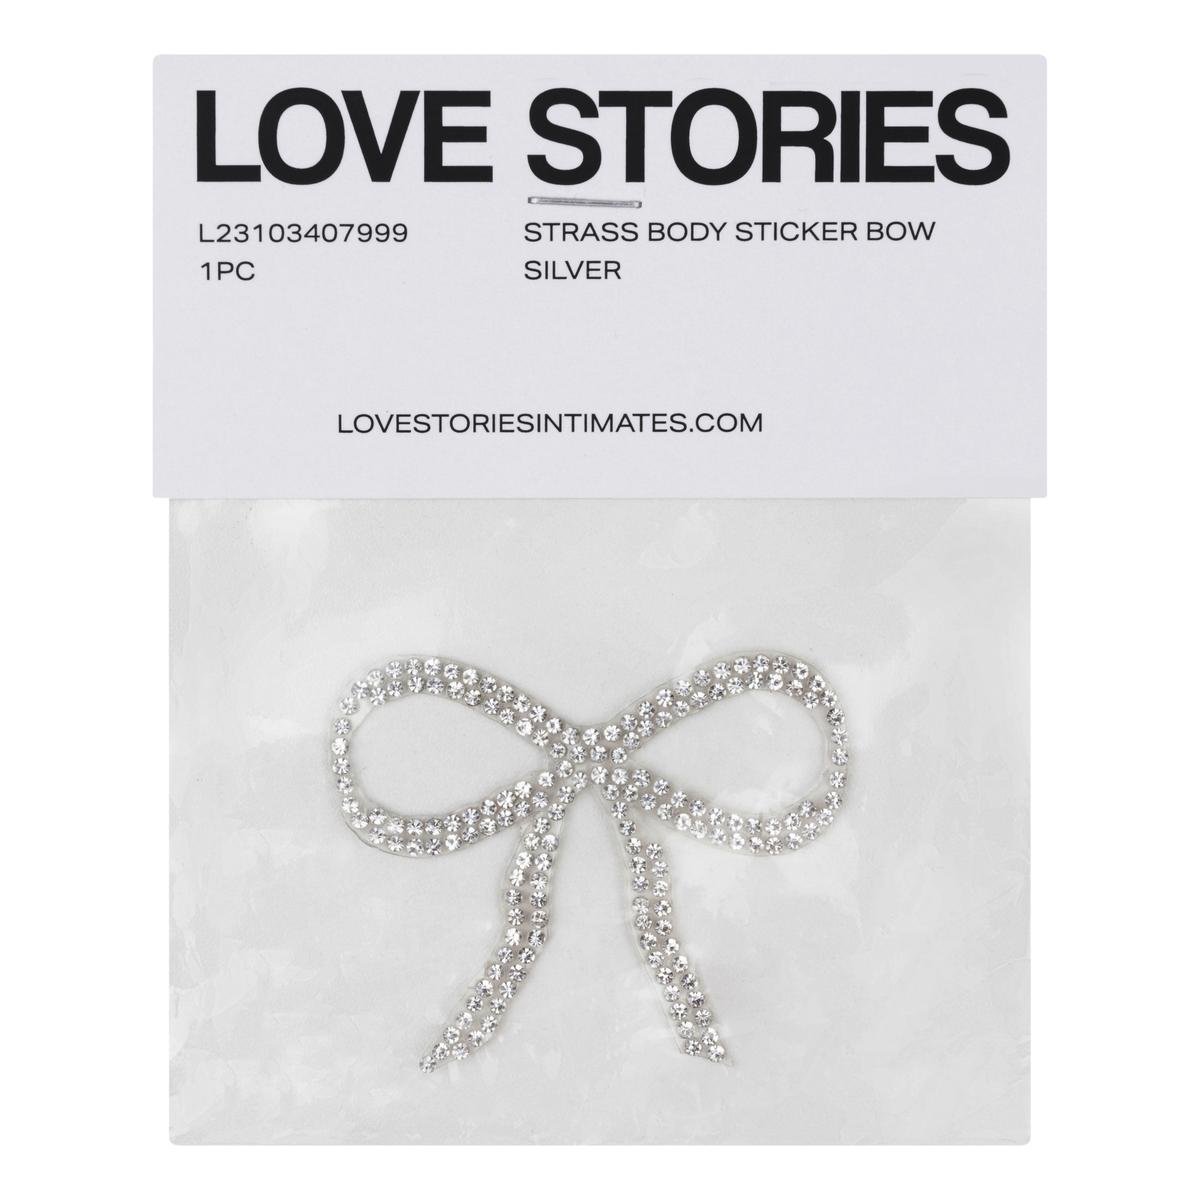 Love Stories Strass Body Sticker Bow